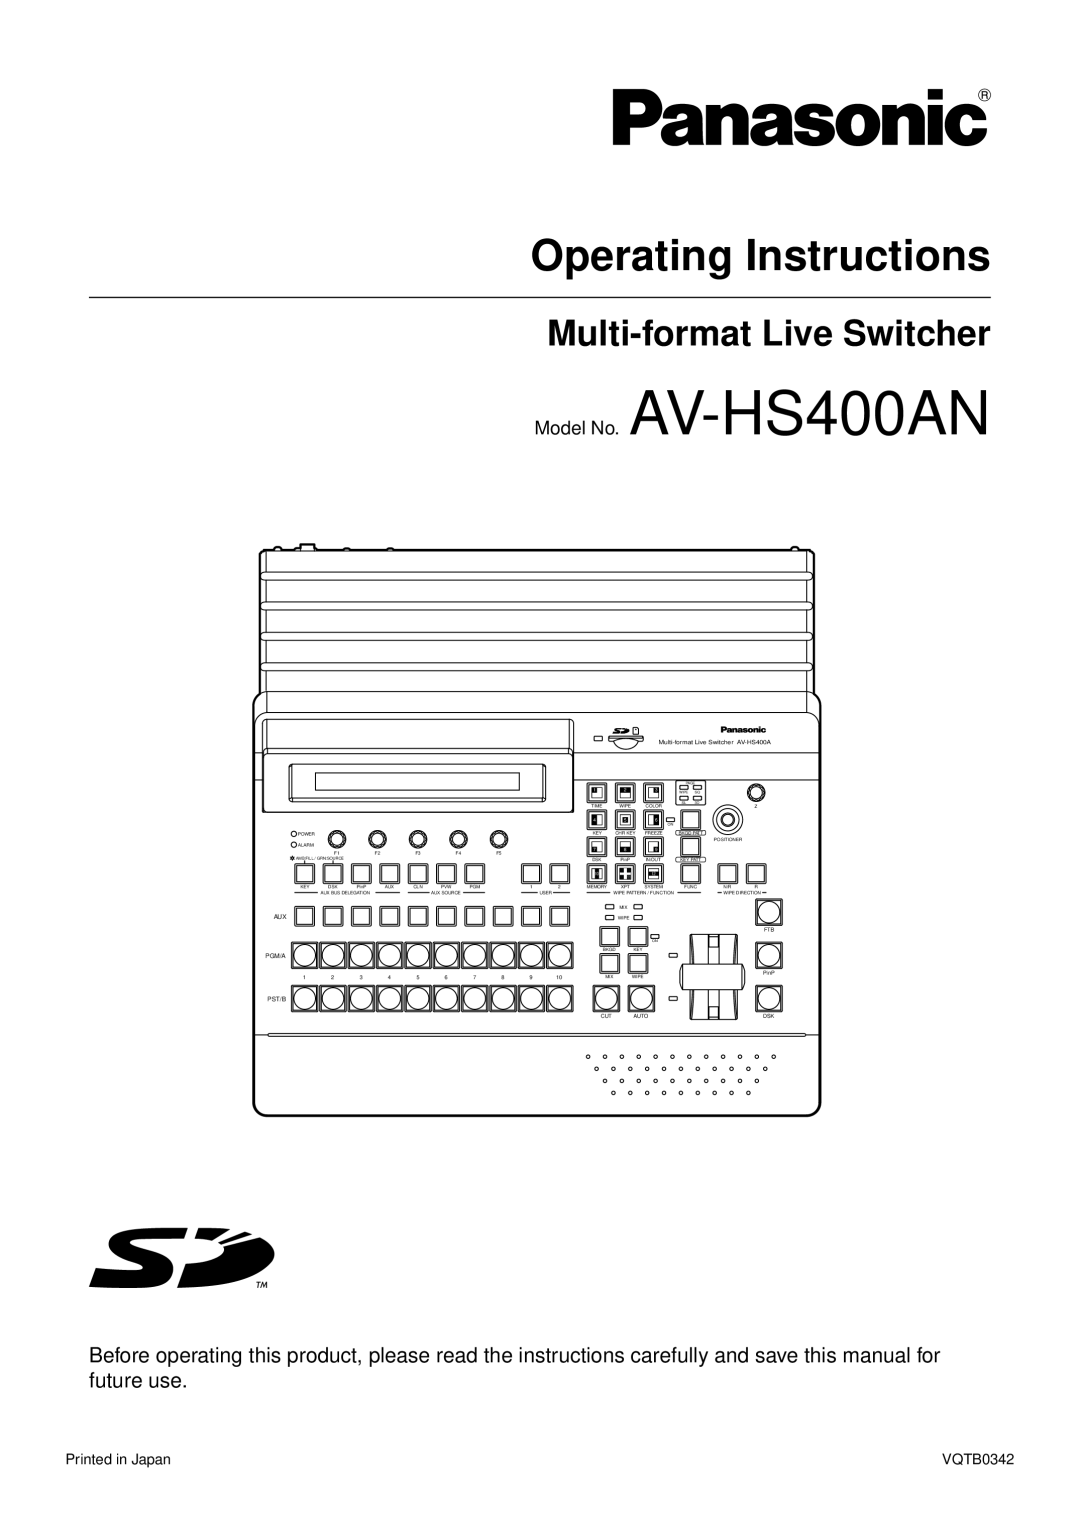 Panasonic AV-HS400AN manual Operating Instructions, Multi-format Live Switcher 